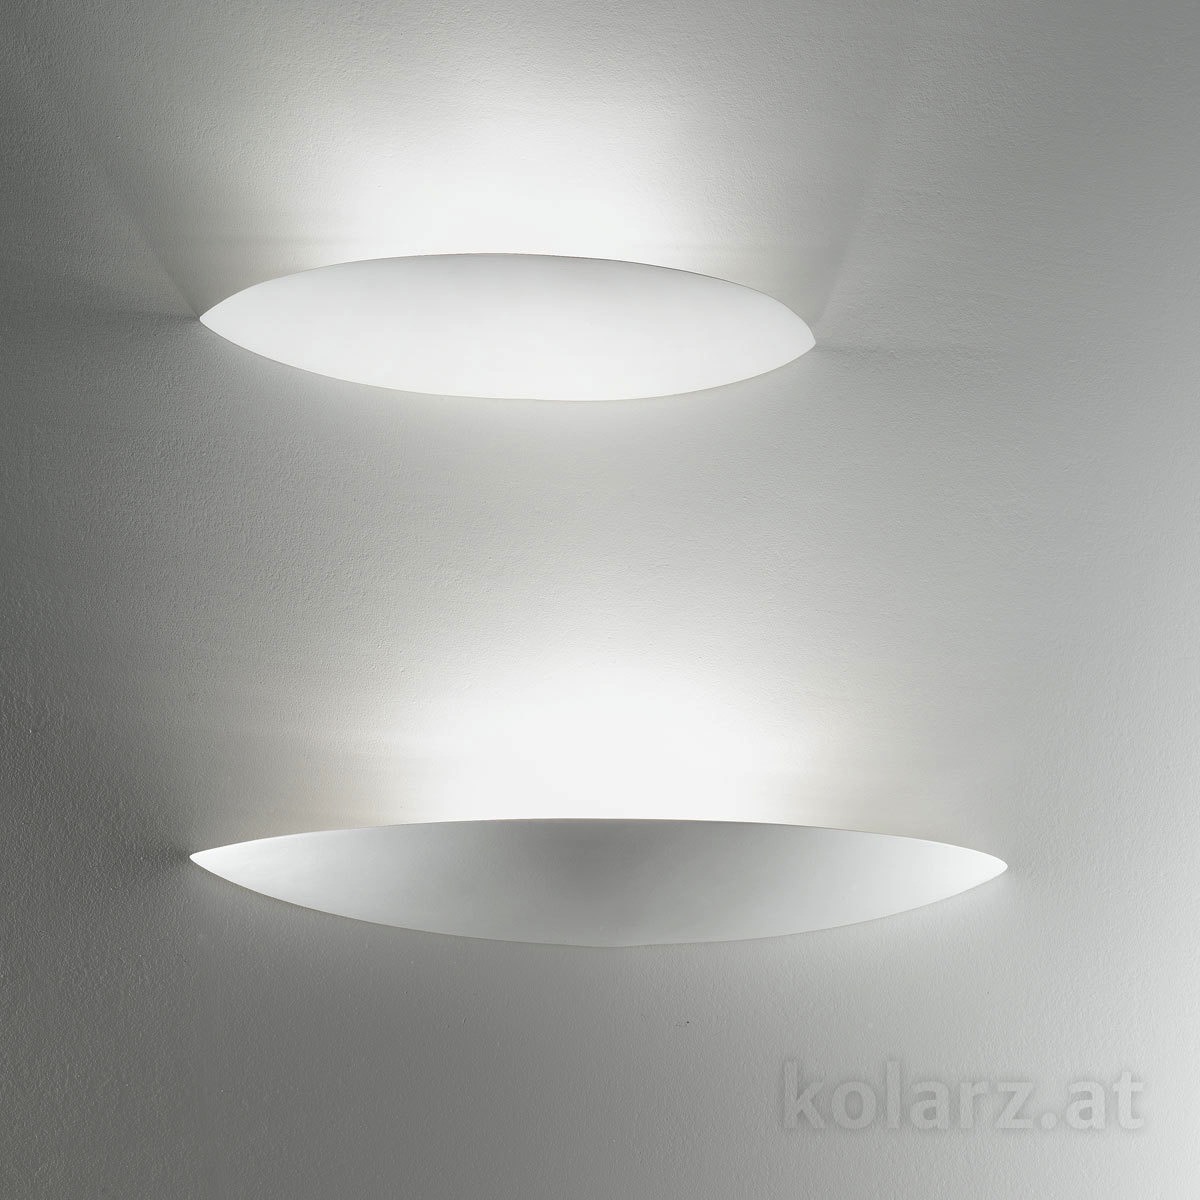 KOLARZ Leuchten Klassische Wandleuchten & Wandlampen von KOLARZ Leuchten Elegance Wandleuchte 219.60.1